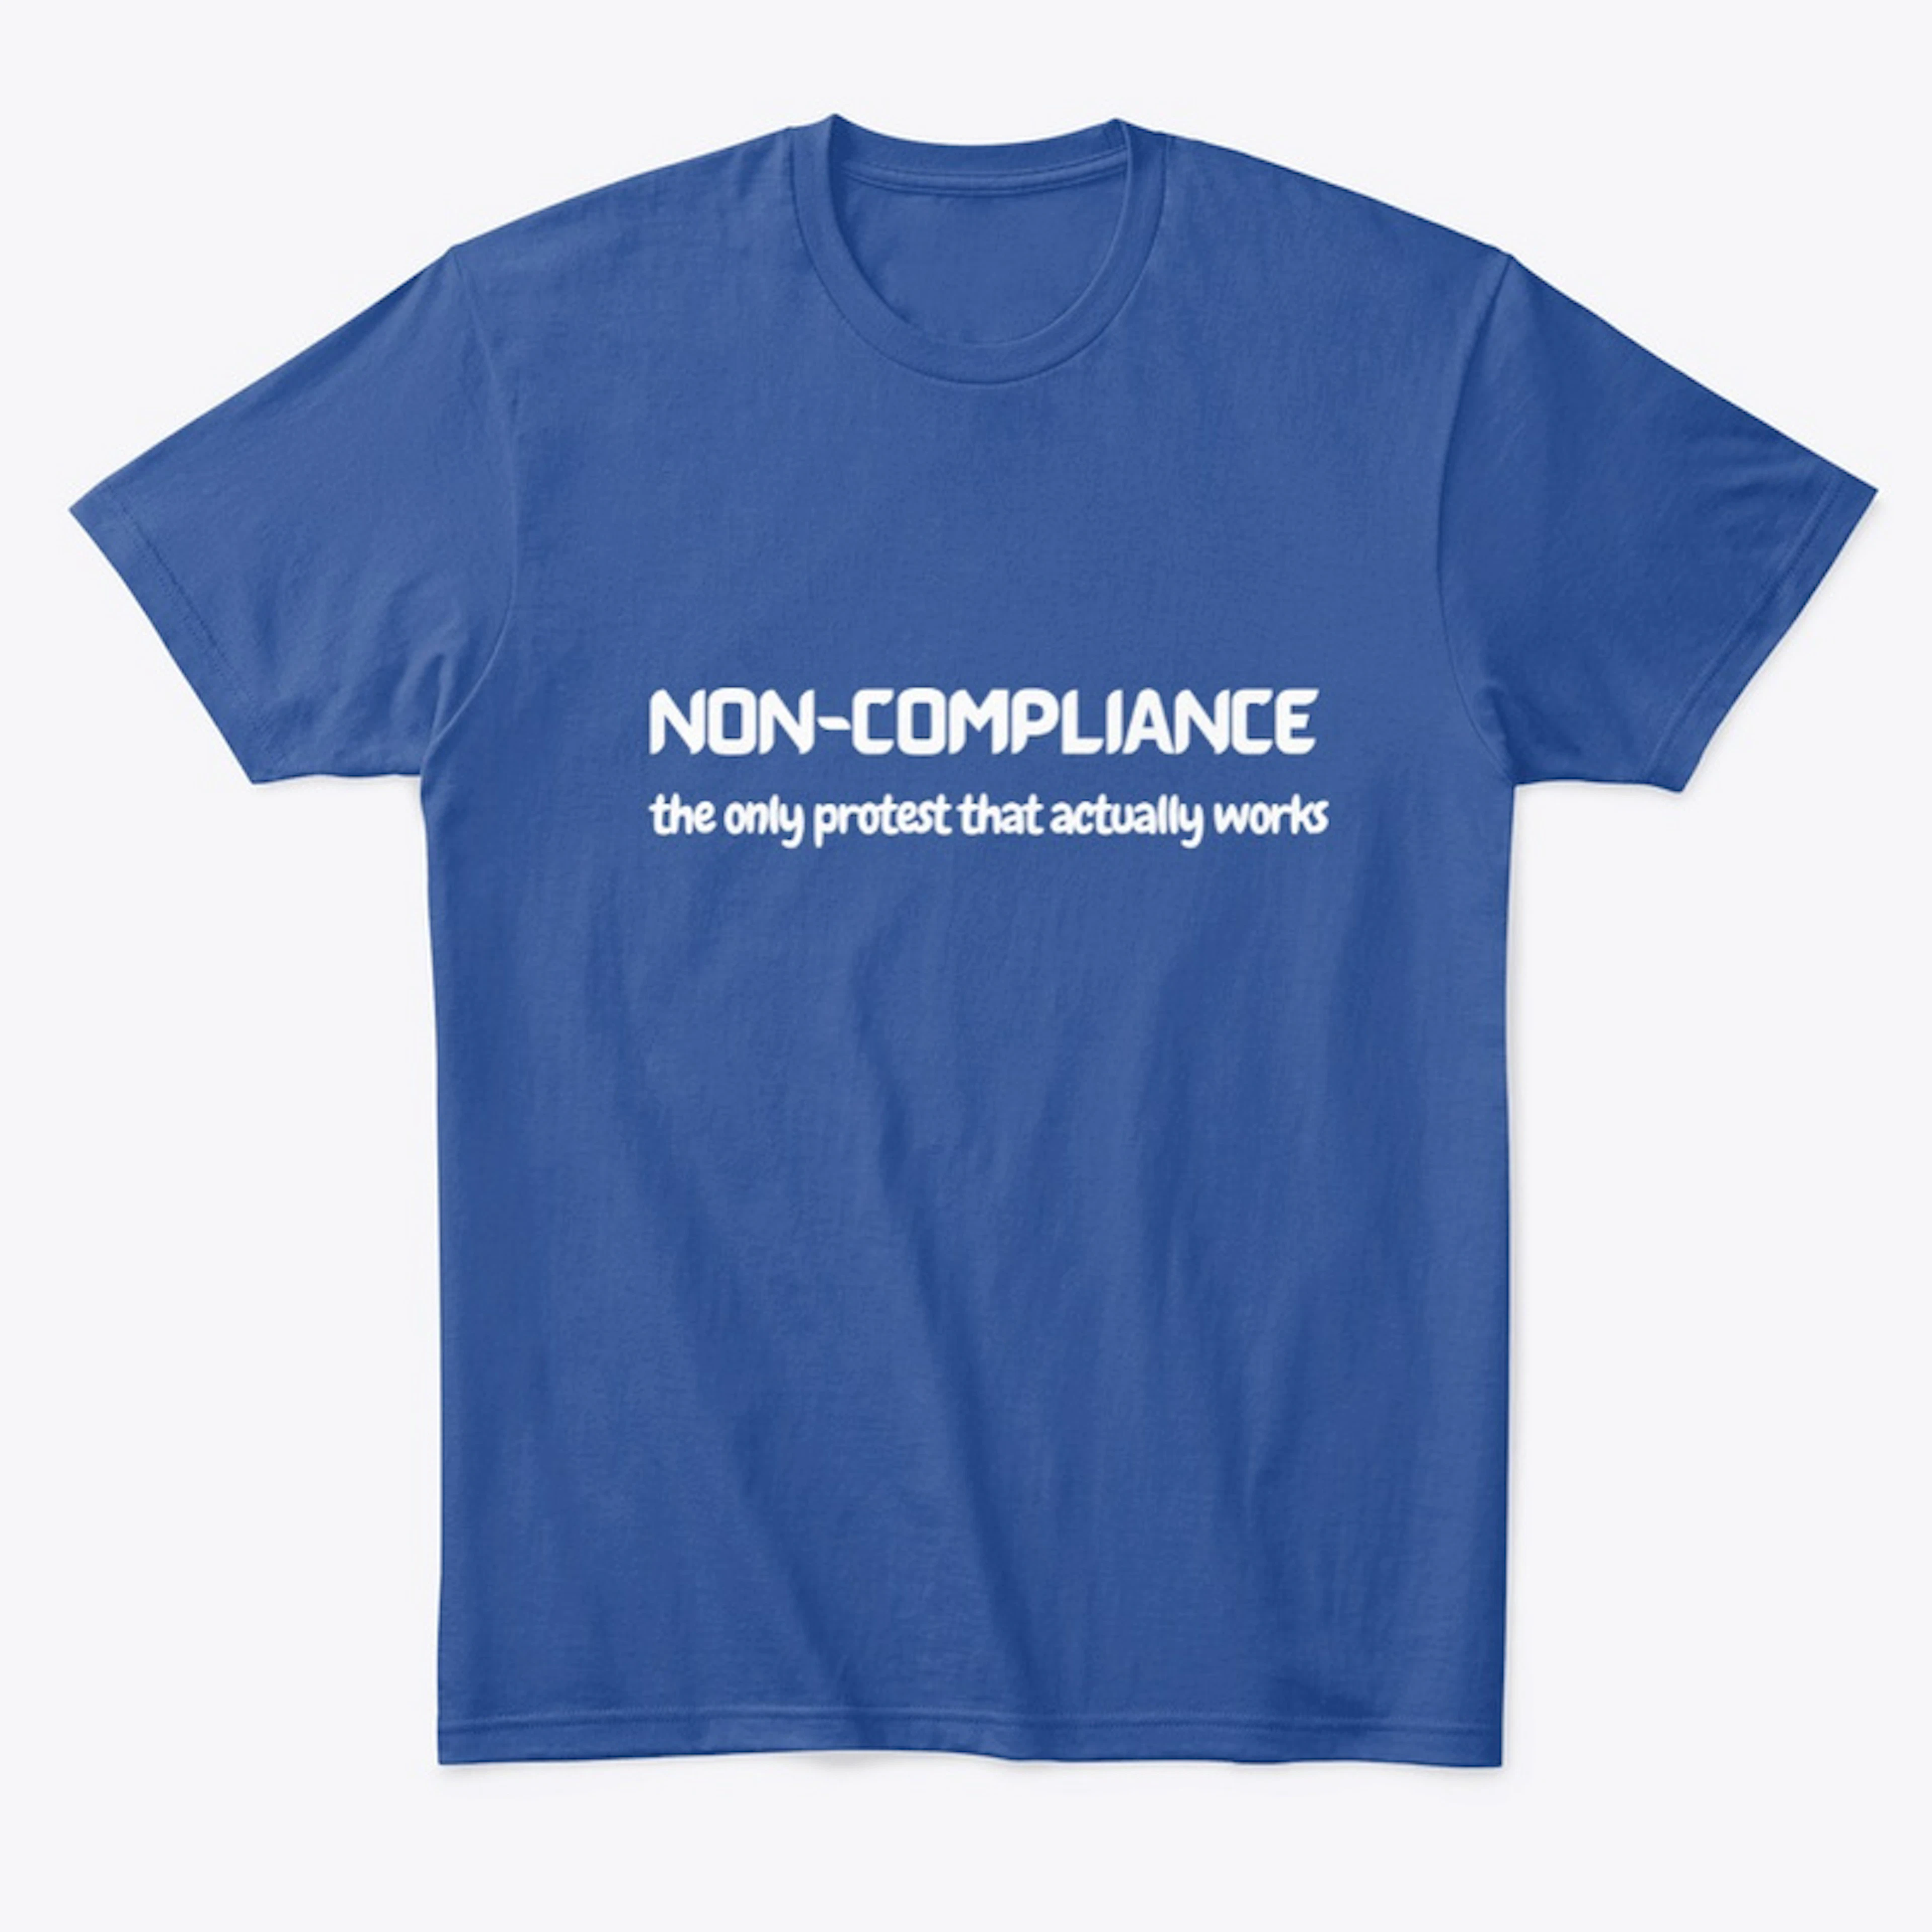 Noncompliance protest